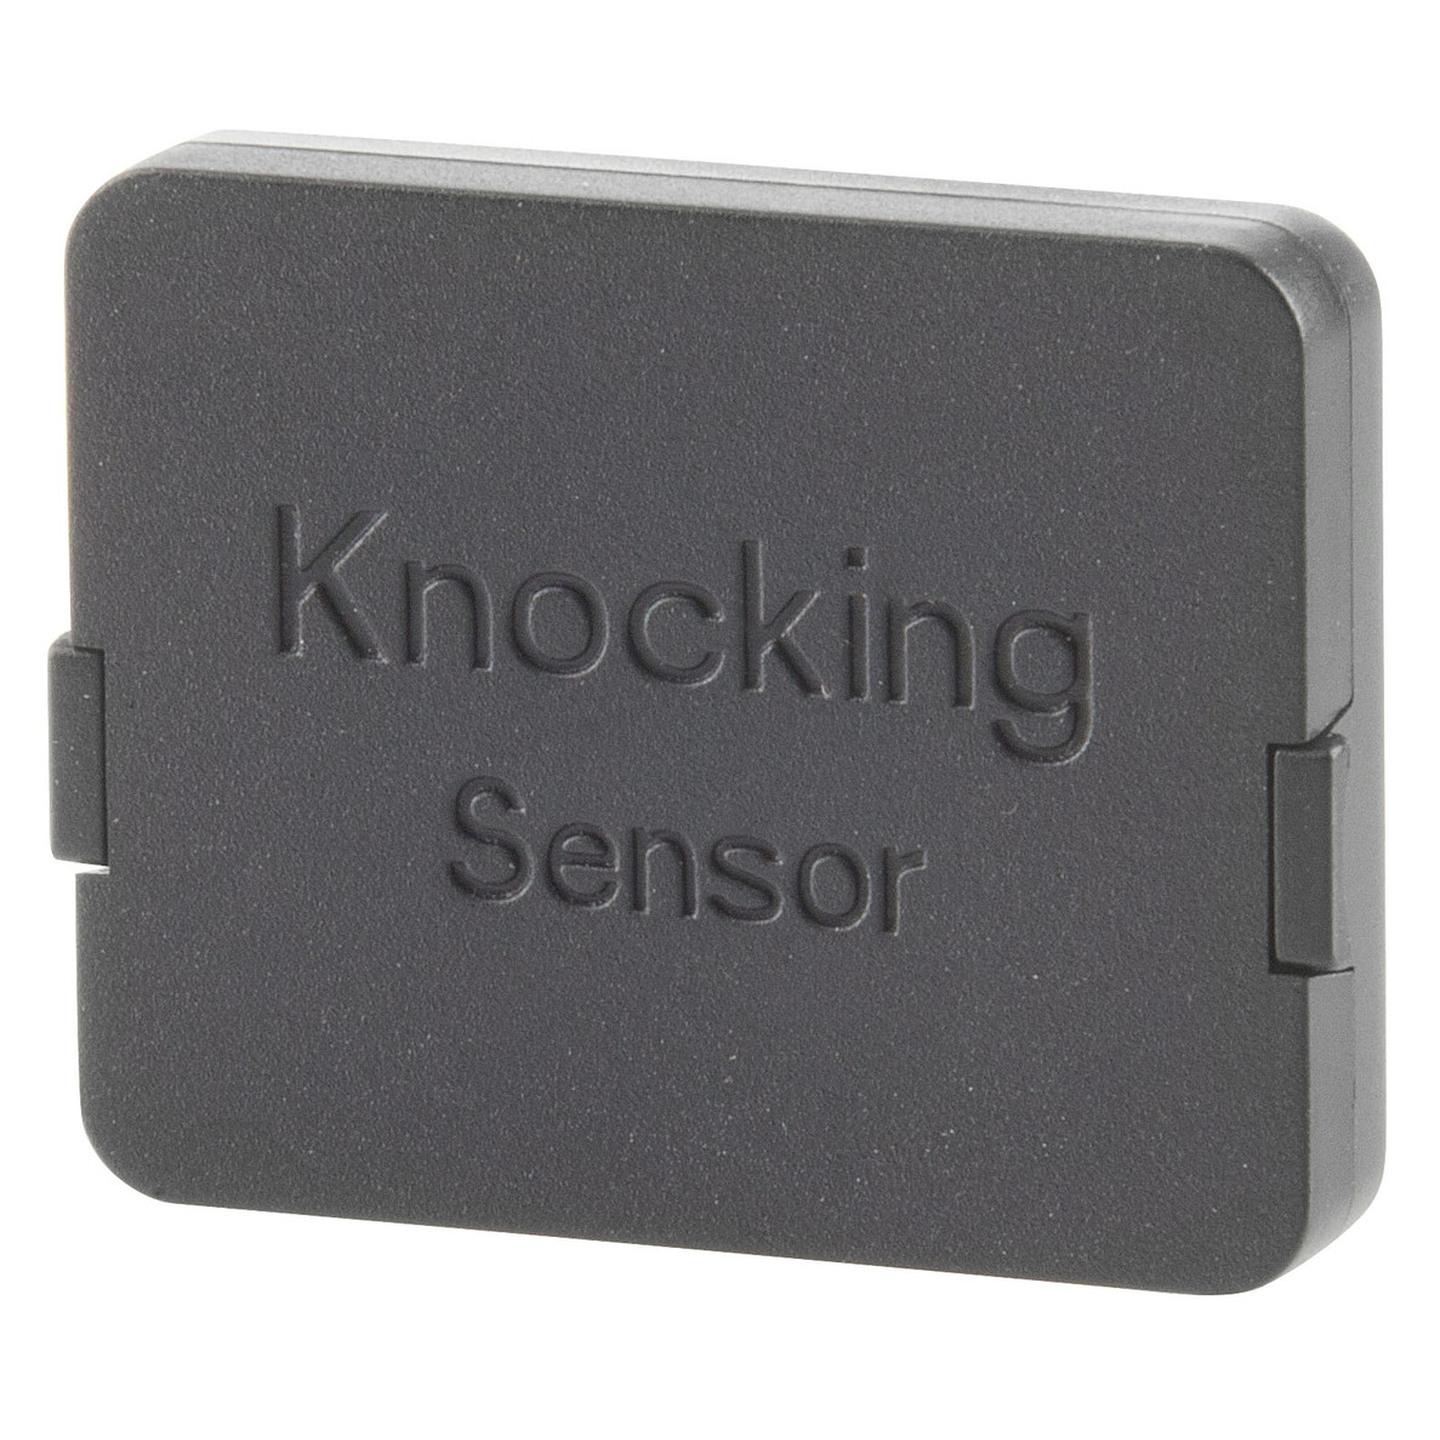 Vibration Knocking Sensor to suit Video Peephole Viewer